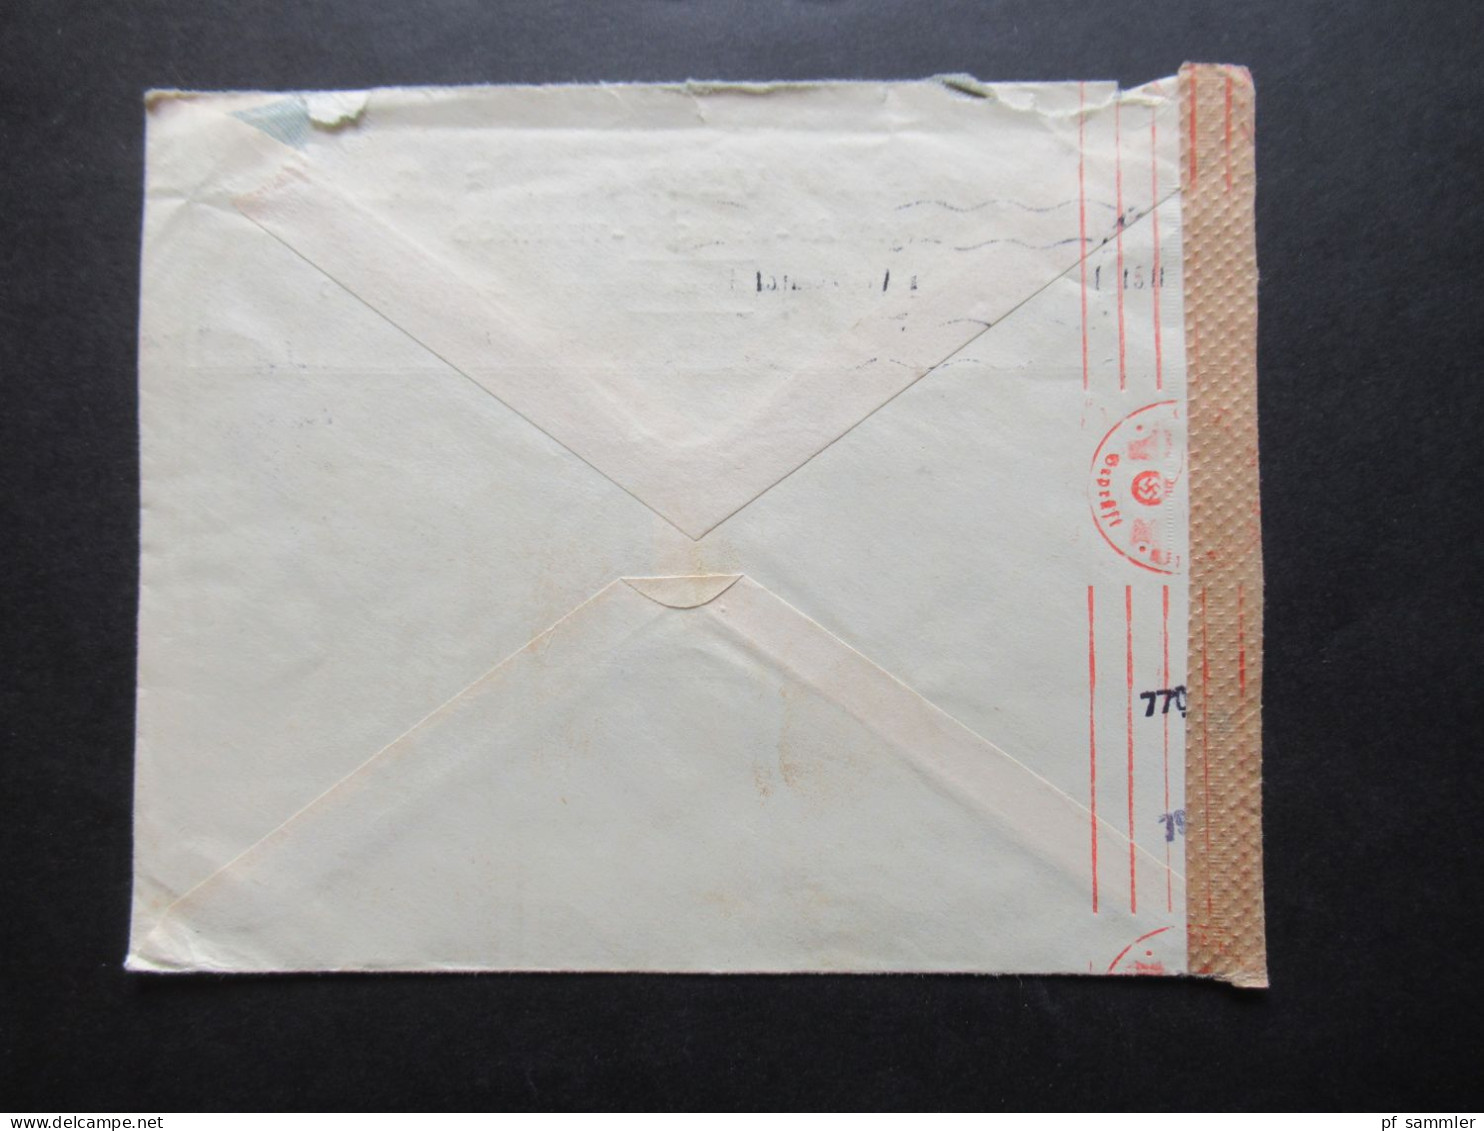 Türkei 1942 Zensurbeleg / Zensurstempel Und Verschlussstreifen Umschlag Ahmet Veli Menger Istanbul - München - Brieven En Documenten